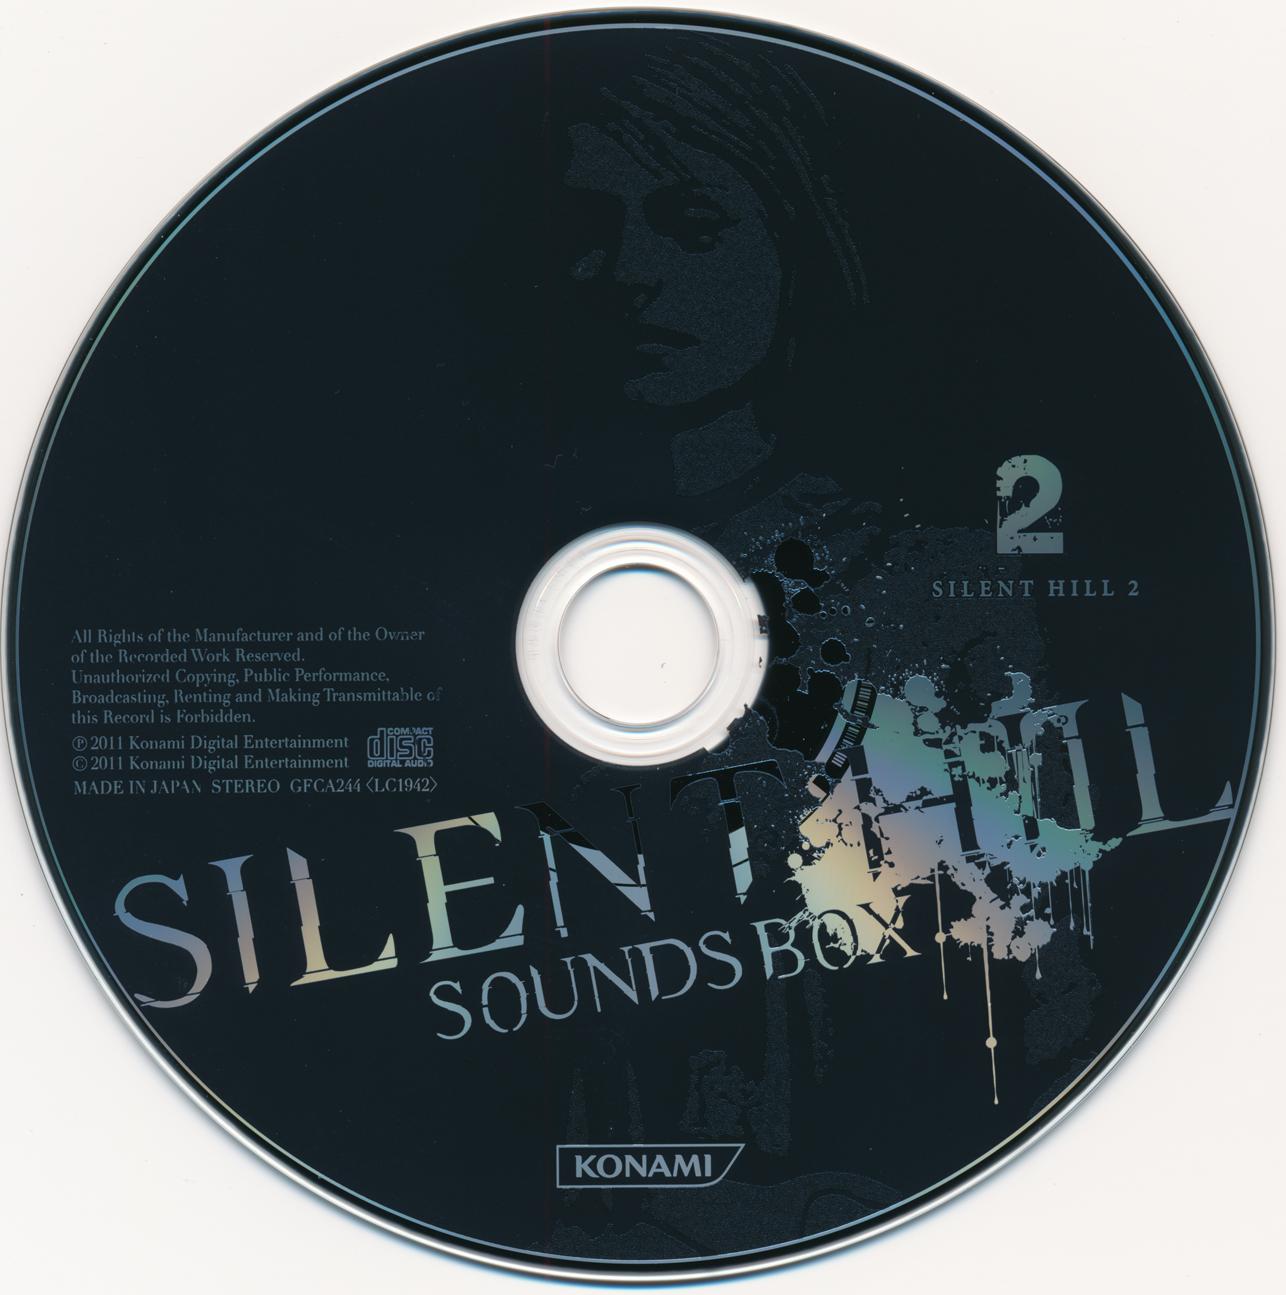 SILENT HILL SOUNDS BOX (2011) MP3 - Download SILENT HILL SOUNDS 